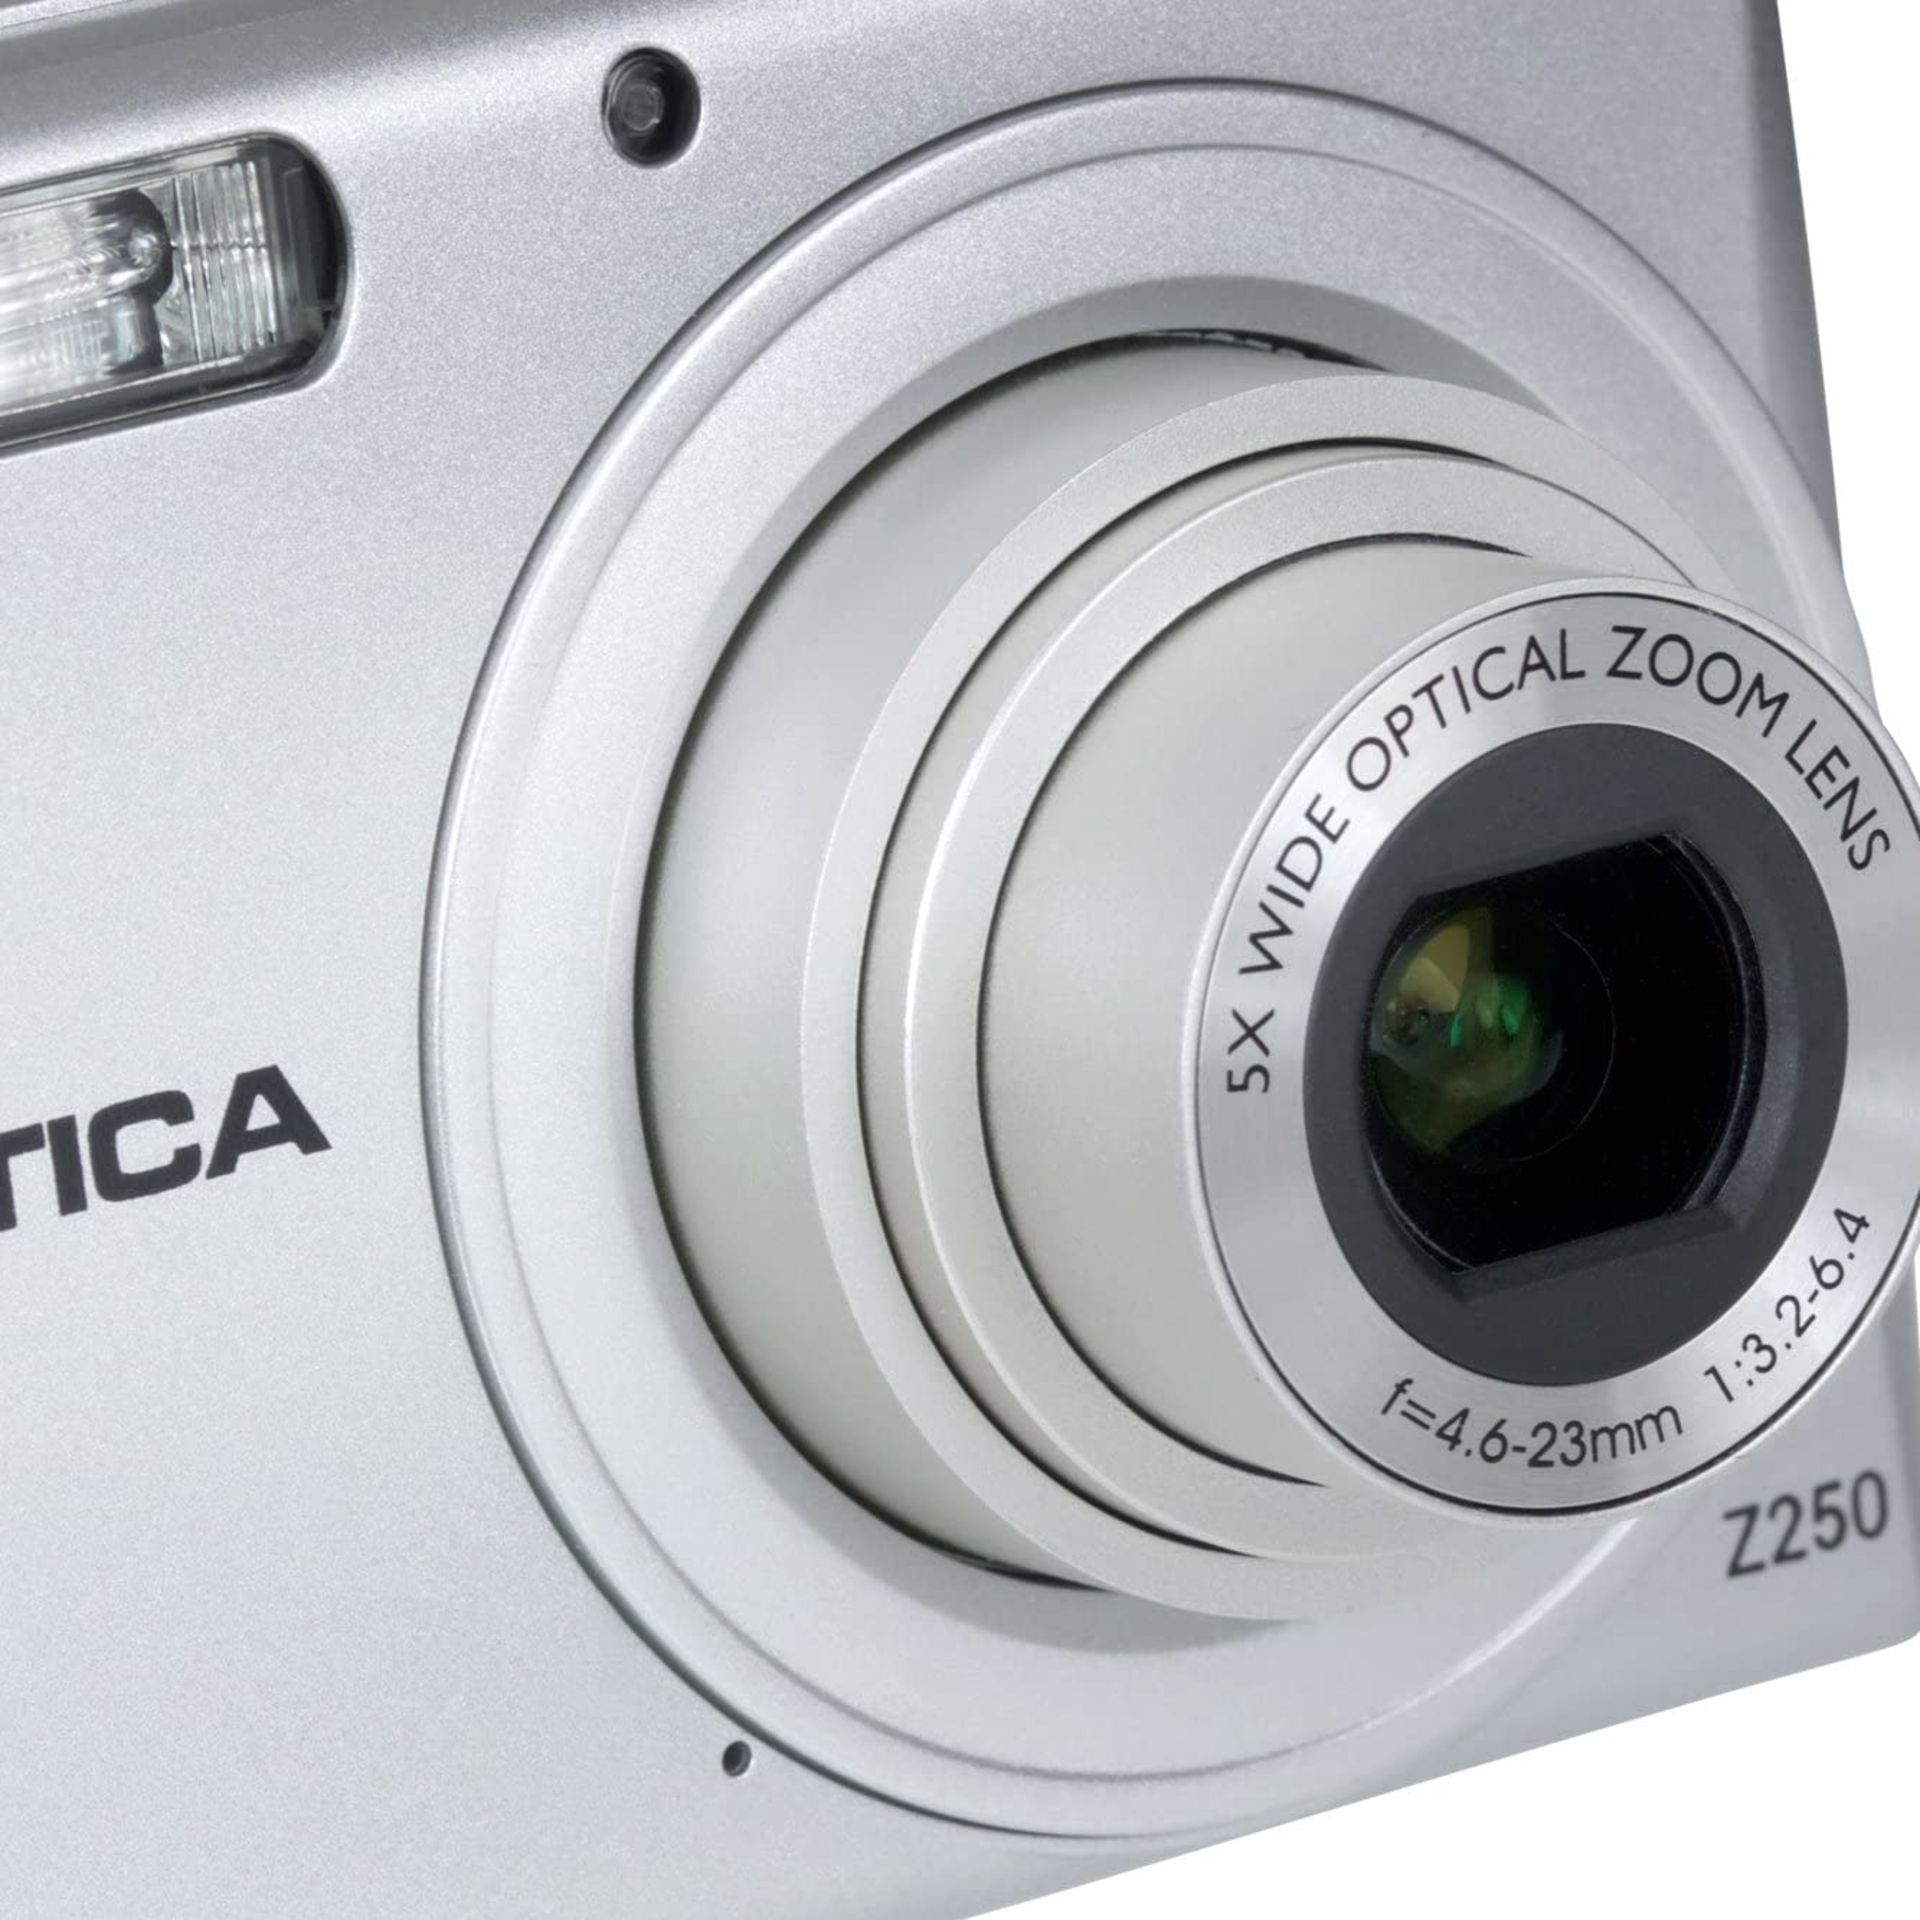 (M38)Praktica Luxmedia Z250 Digital Compact Camera - Silver (20 MP,5x Optical Zoom) Effortlessl... - Image 3 of 4